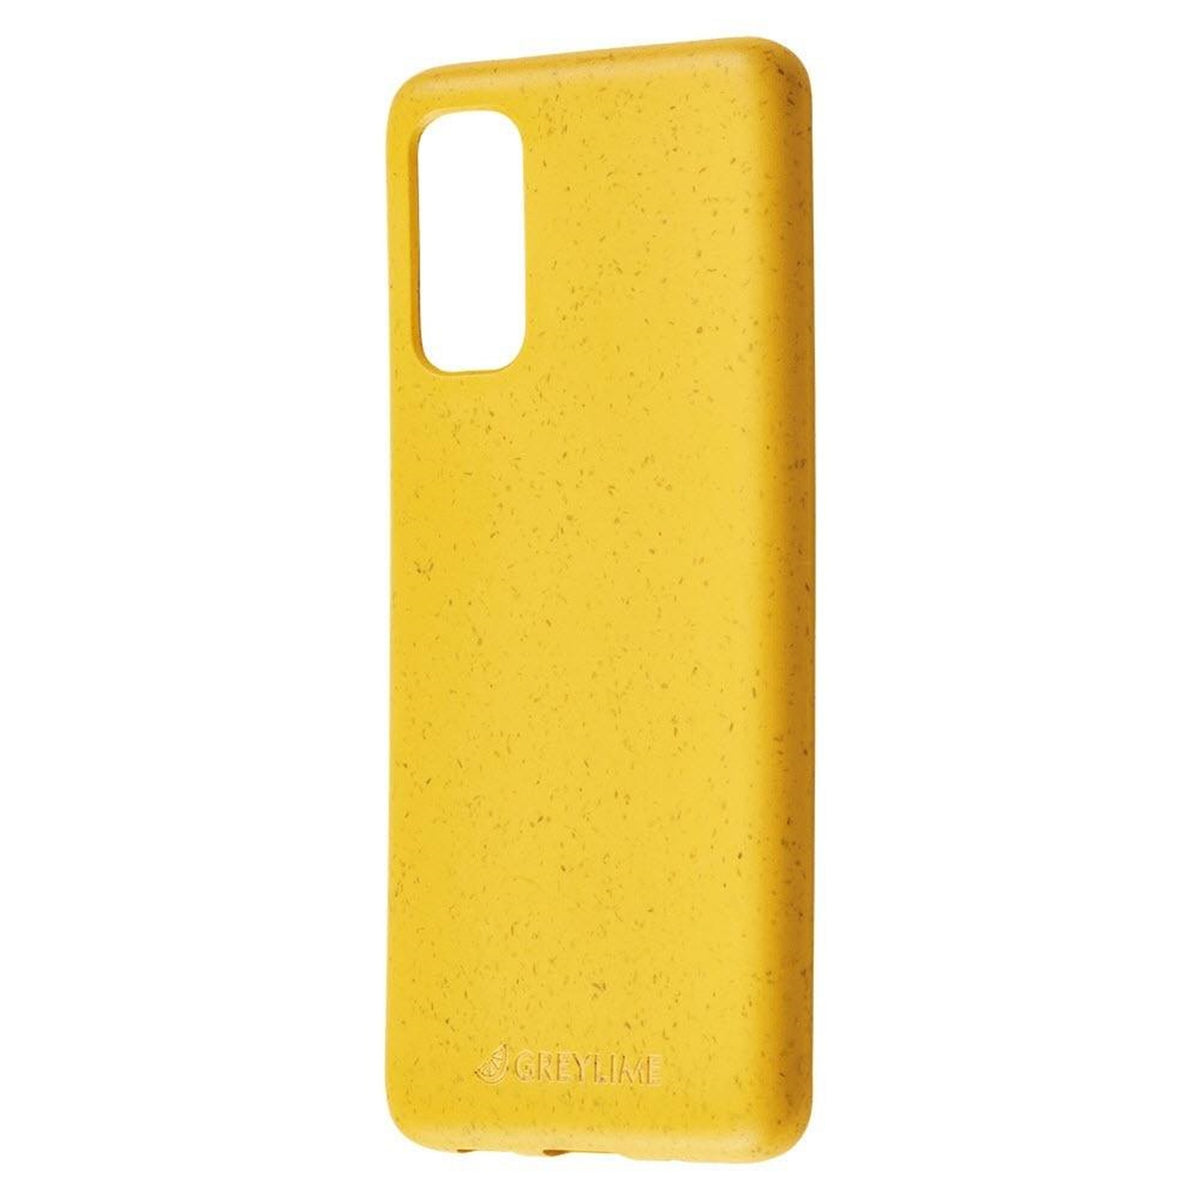 GreyLime-Samsung-Galaxy-S20-Biodegradable-Cover-Yellow-COSAM2006-V2.jpg